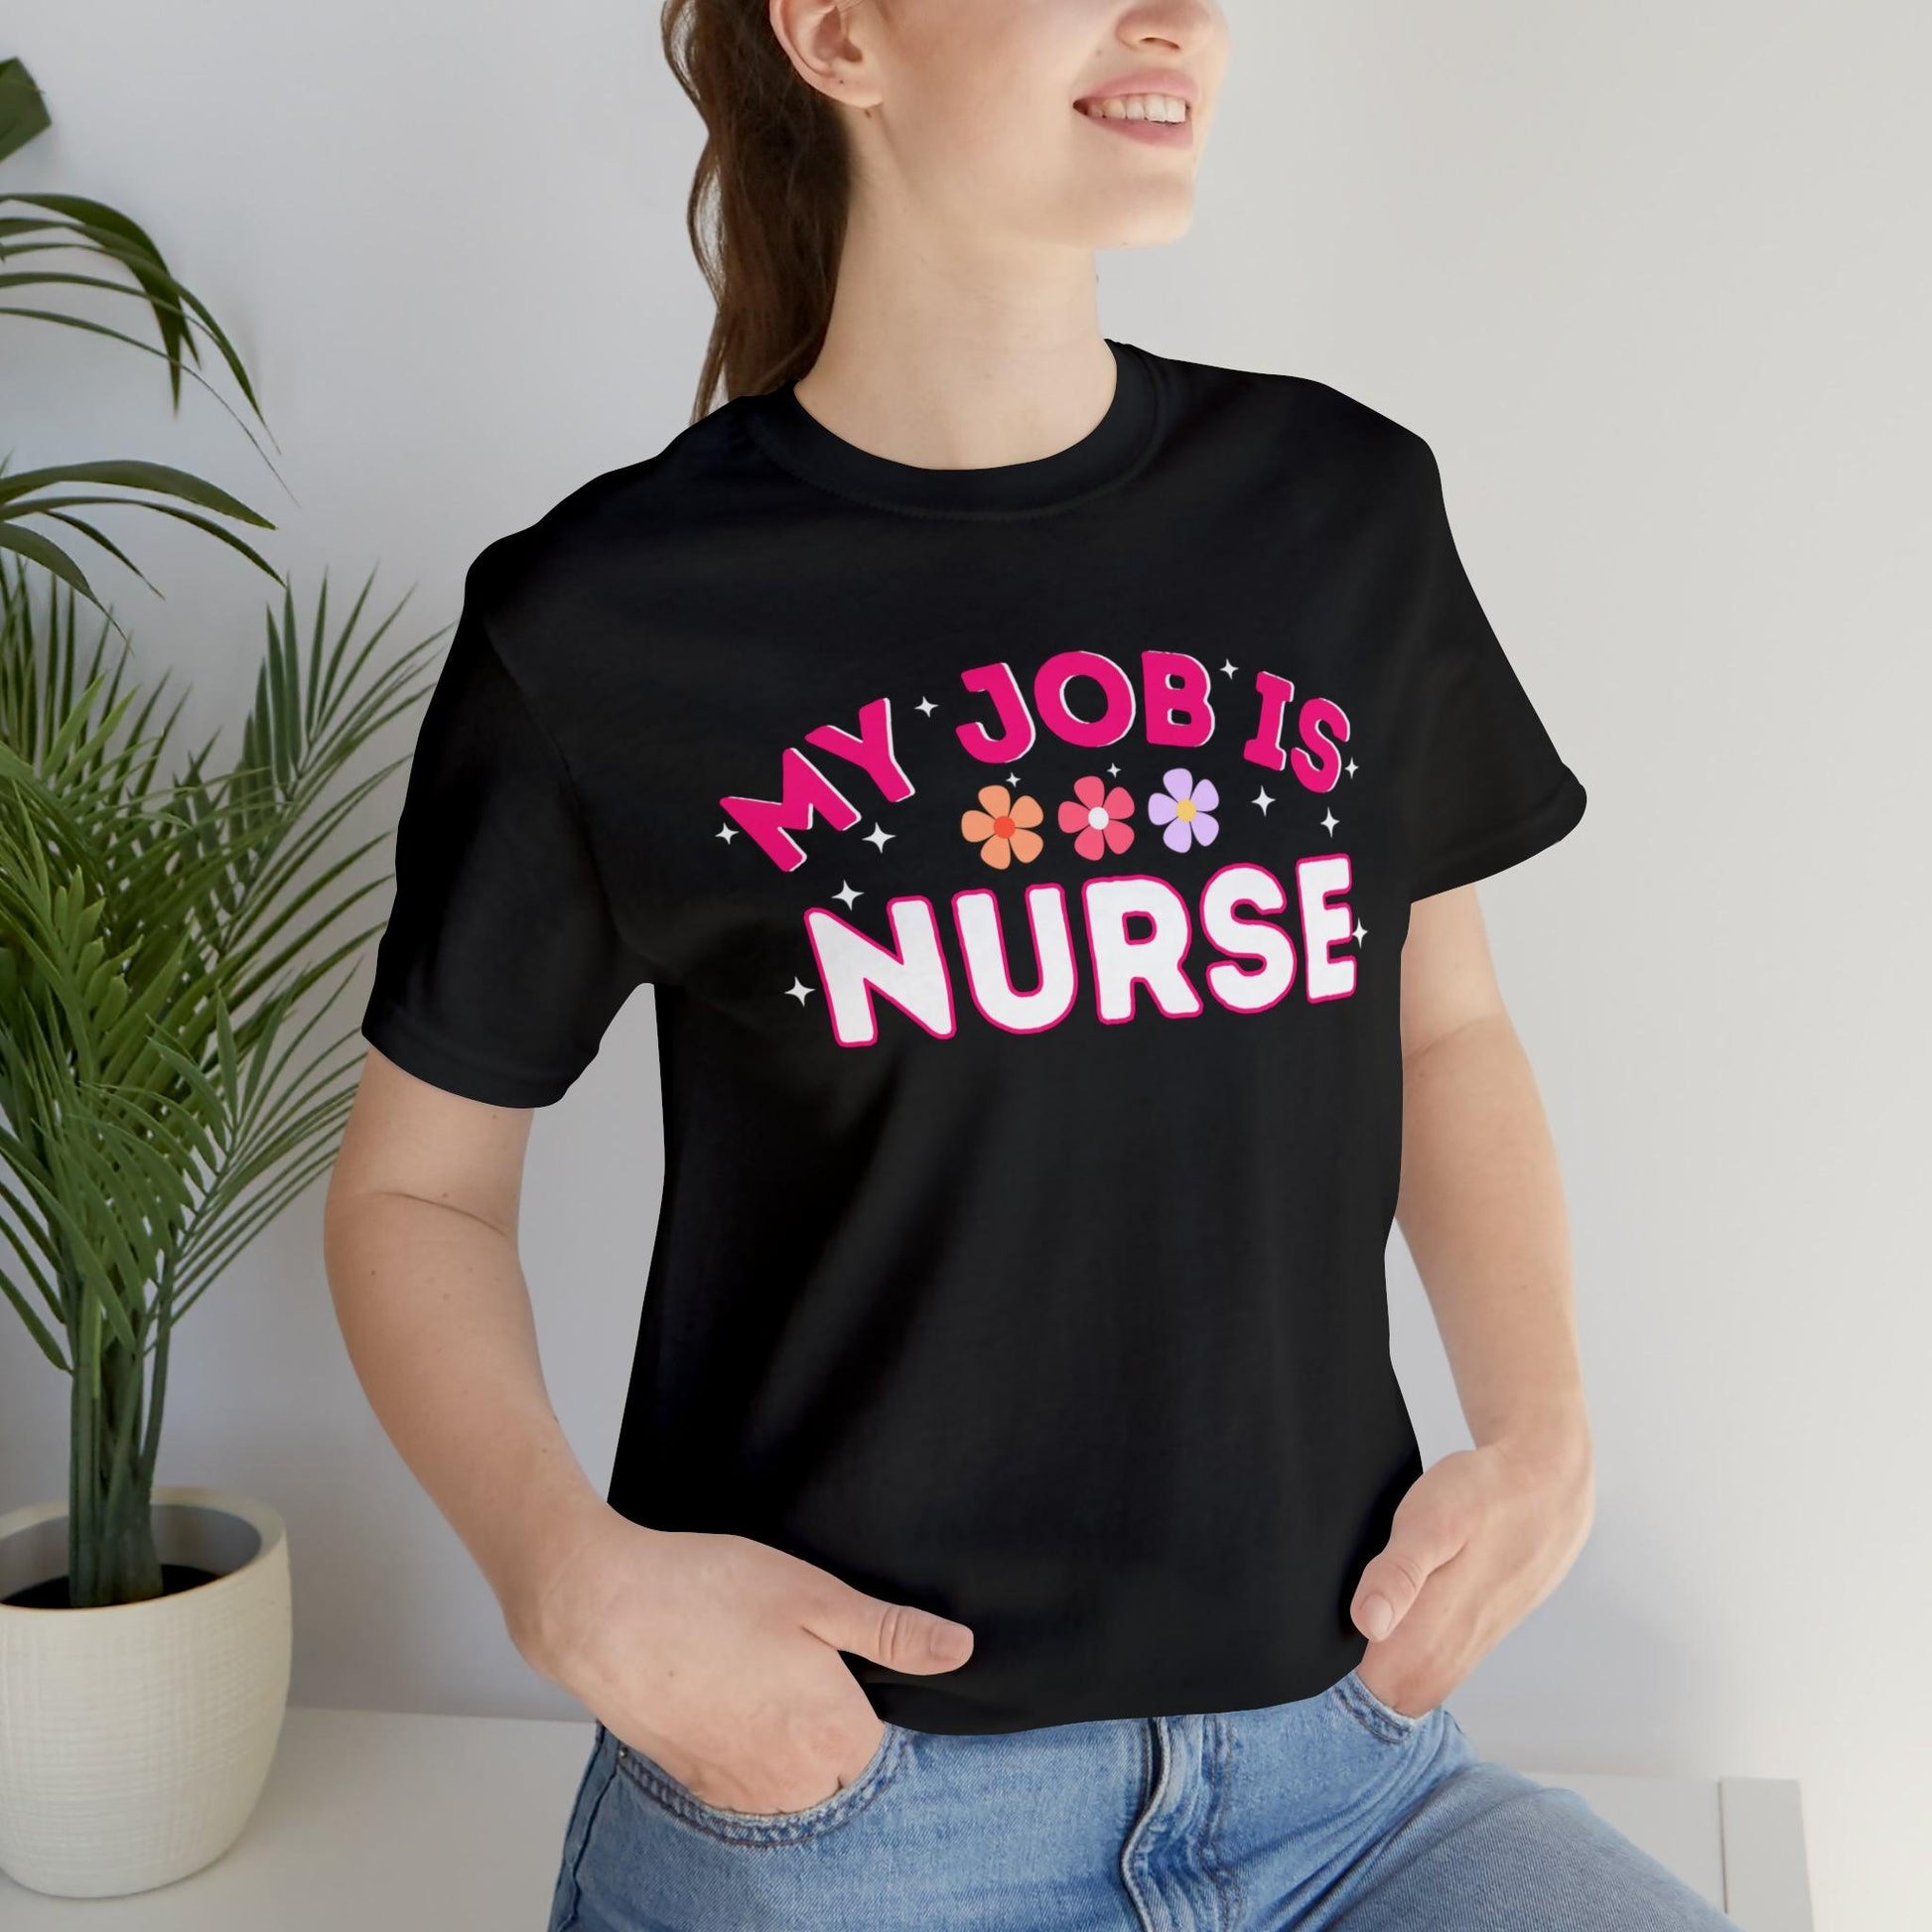 My Job is Nurse Heal Shirt Doctor Shirt Nurse Shirt - Giftsmojo